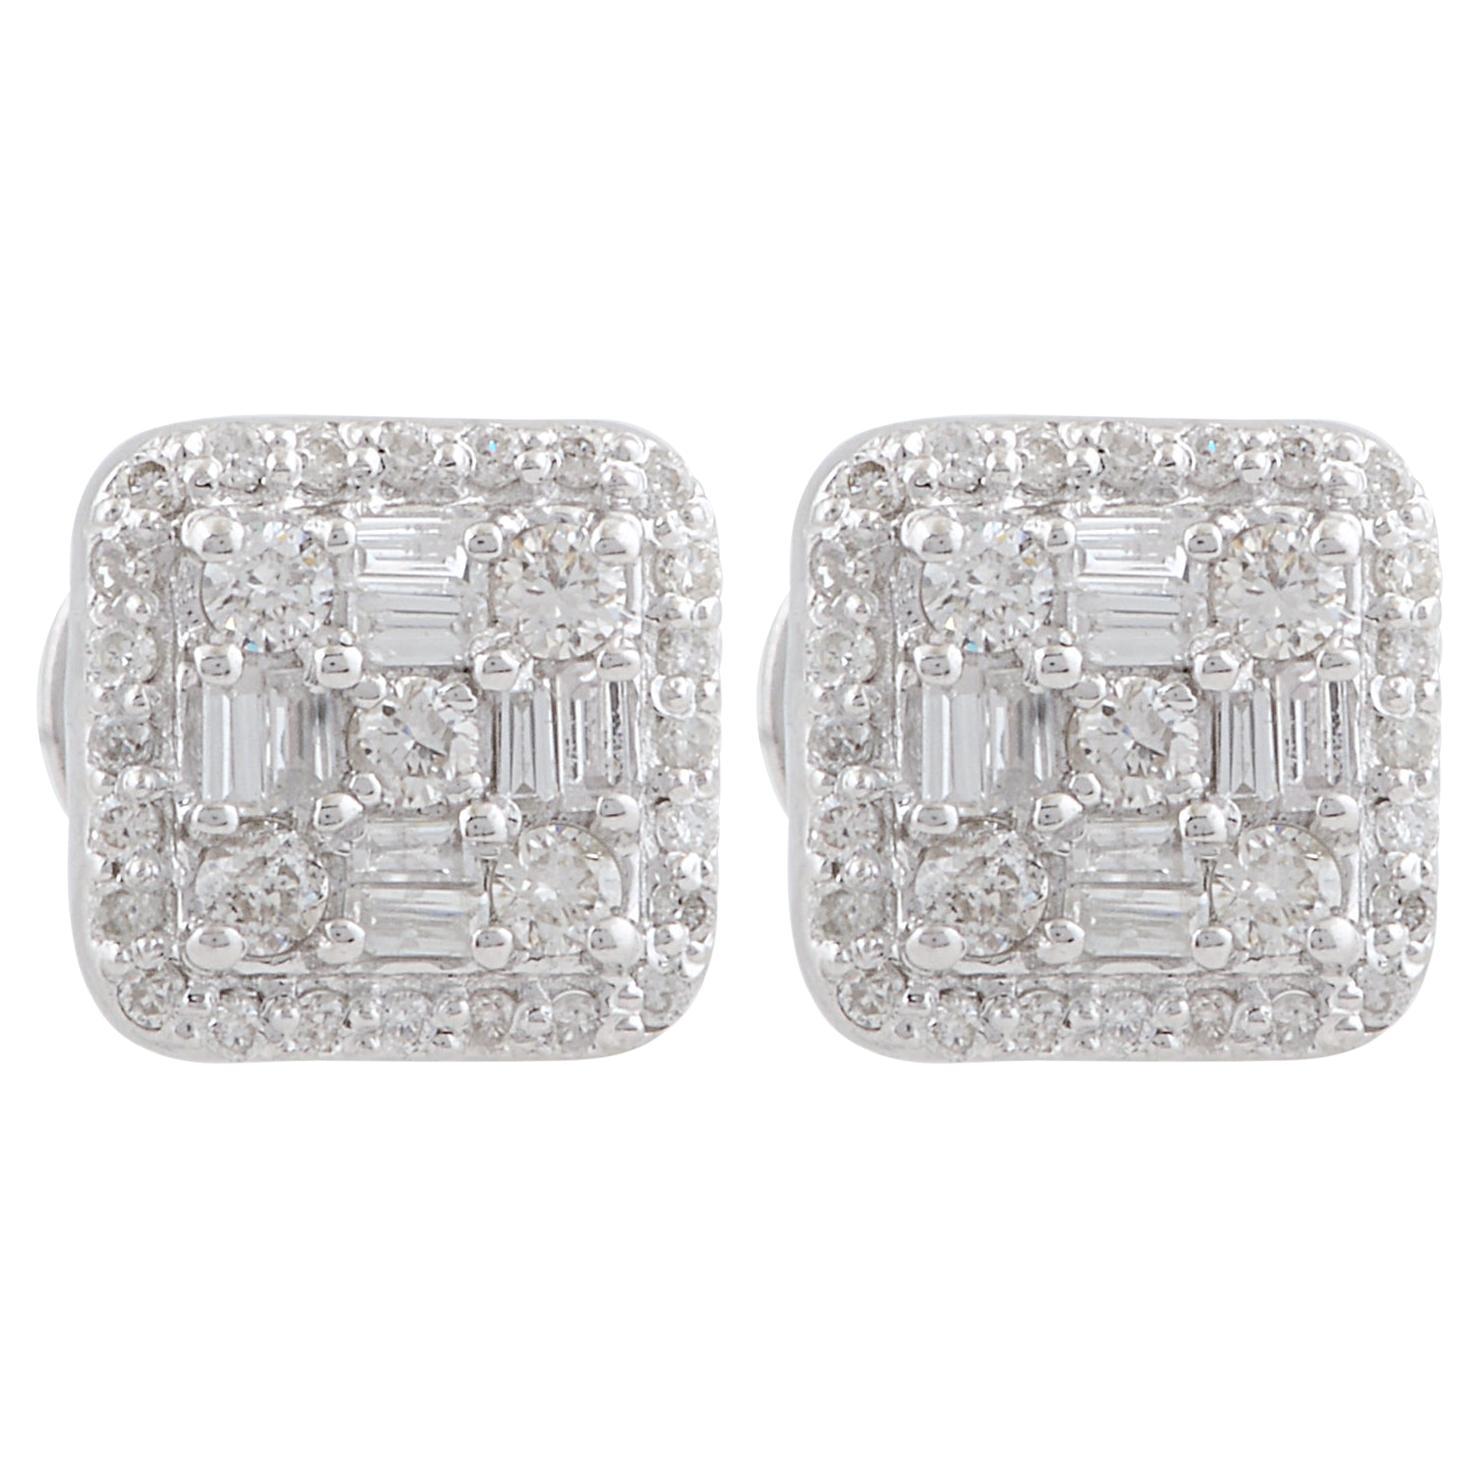 SI Clarity HI Color Baguette Diamond Square Stud Earrings 10 Karat White Gold